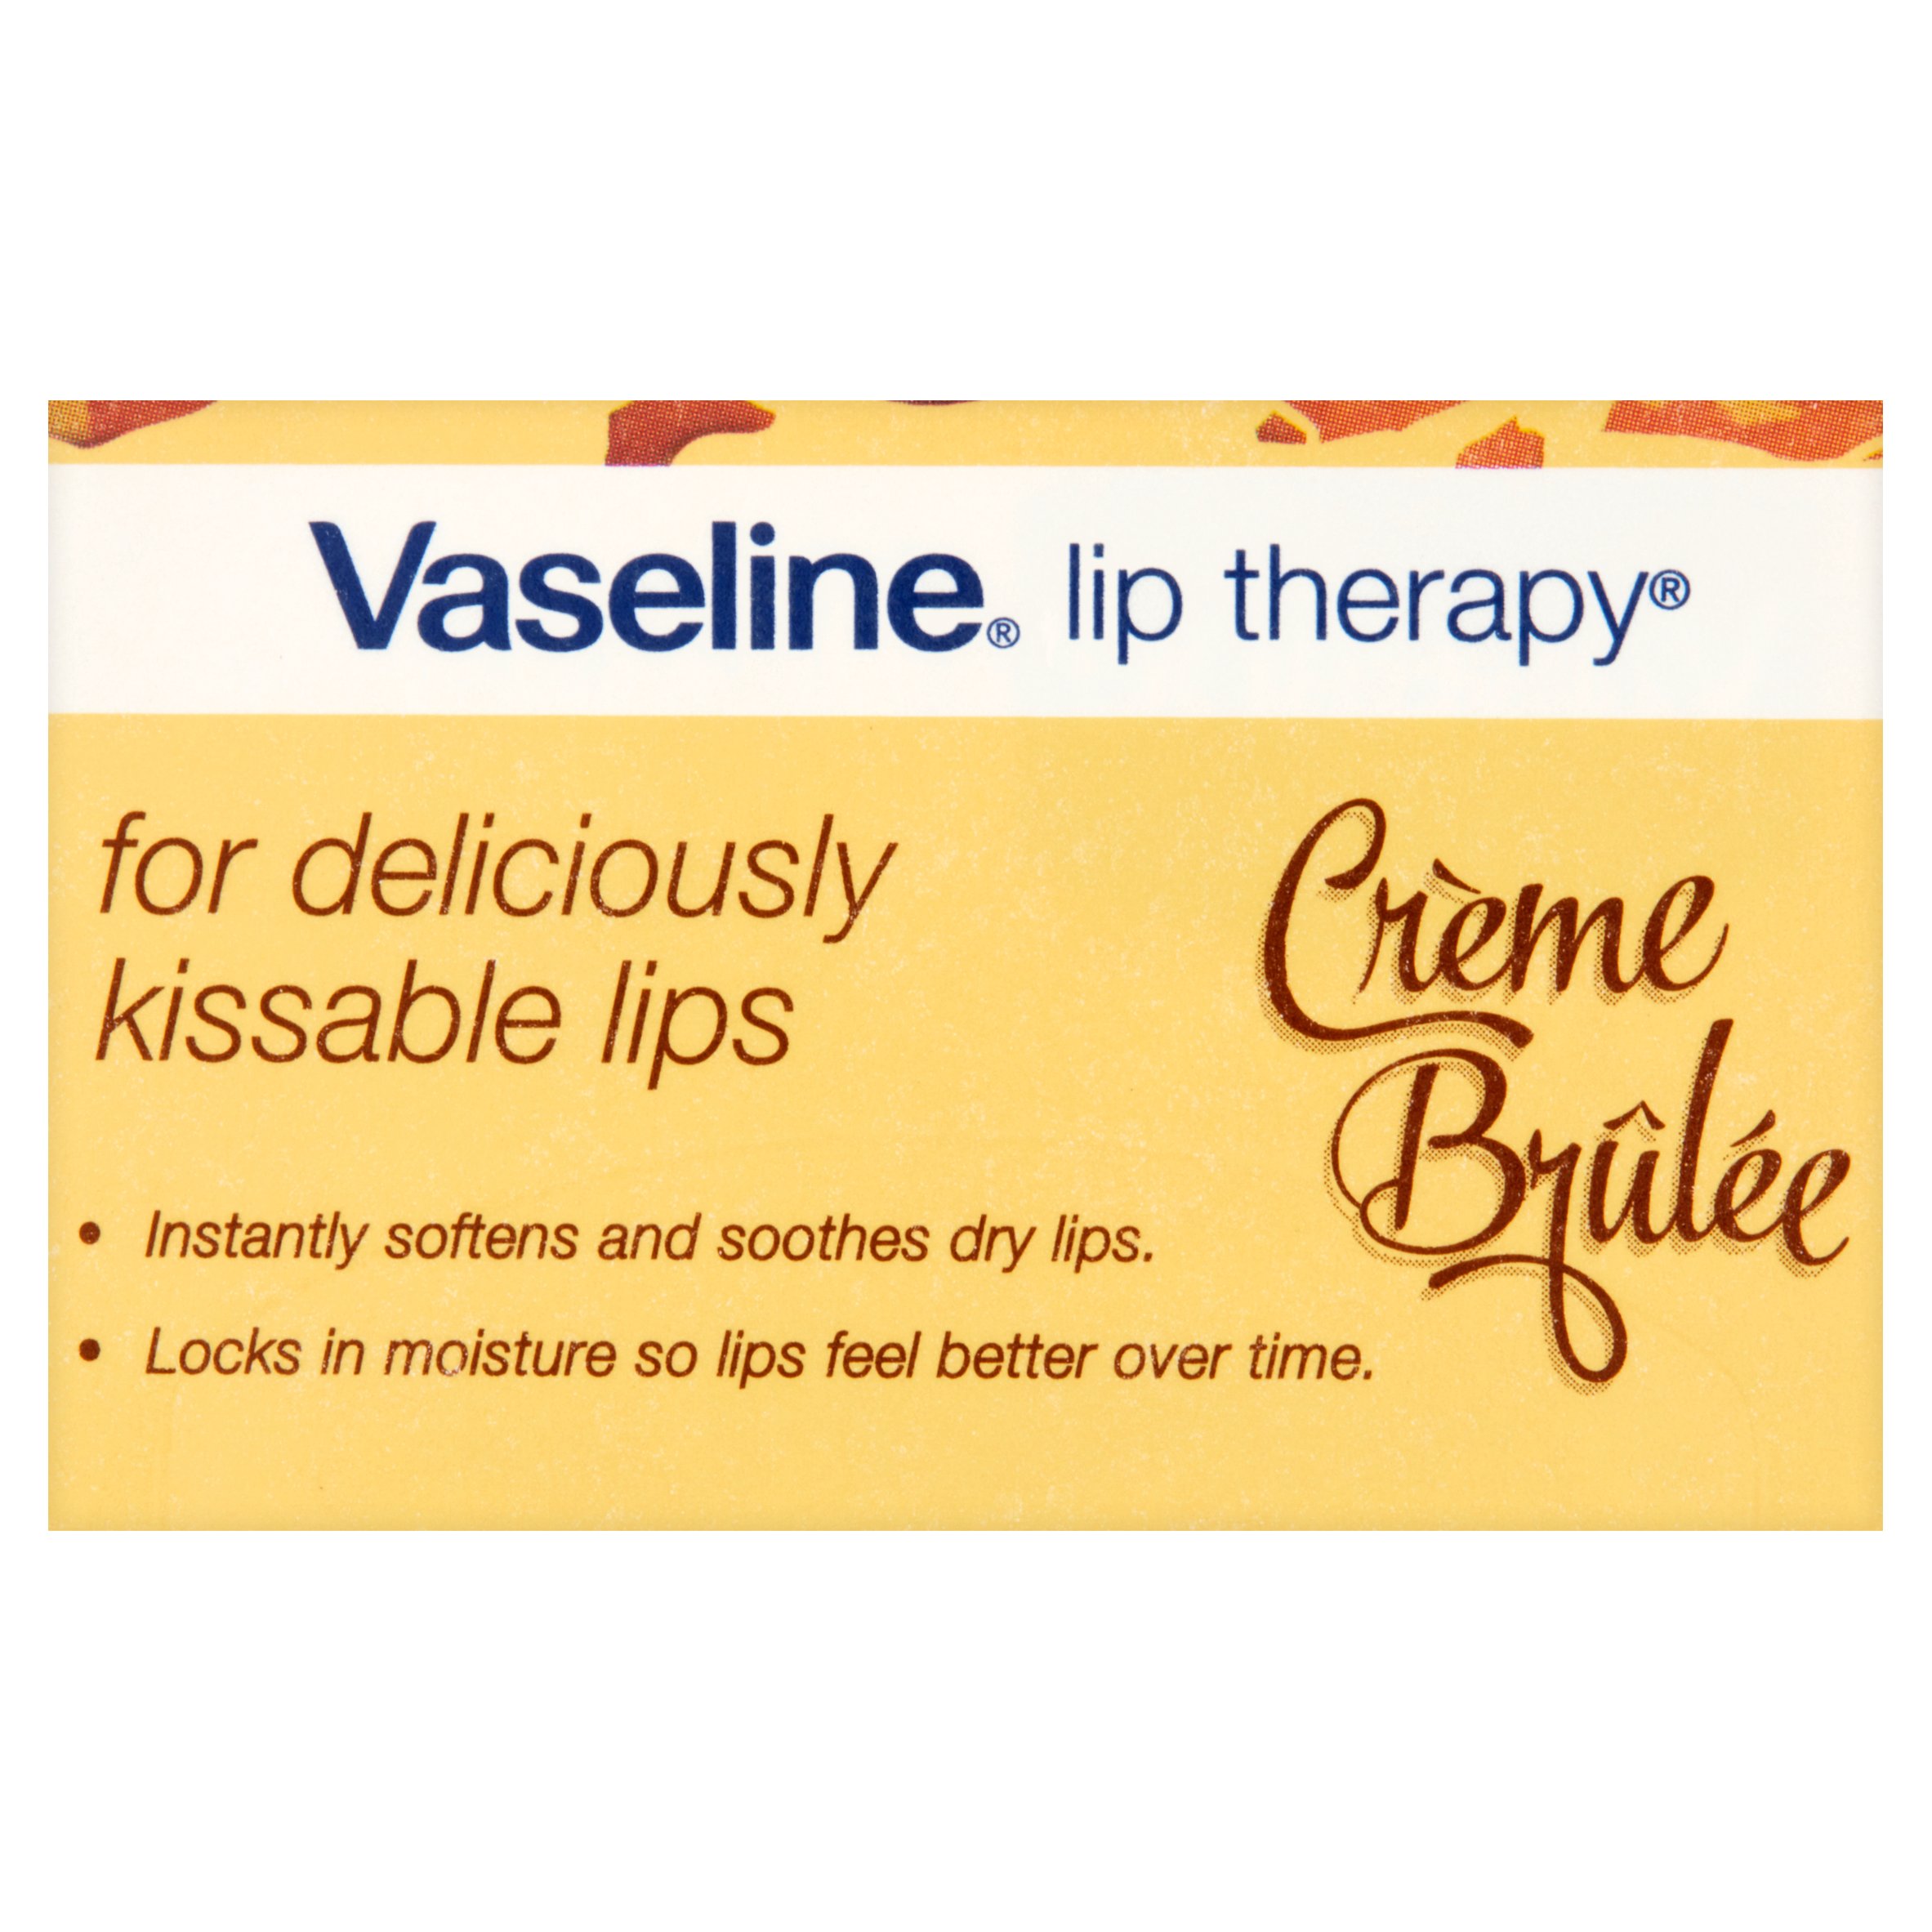 Vaseline Creme Brulee Lip Therapy Lip Balm, 0.25 oz - image 4 of 4